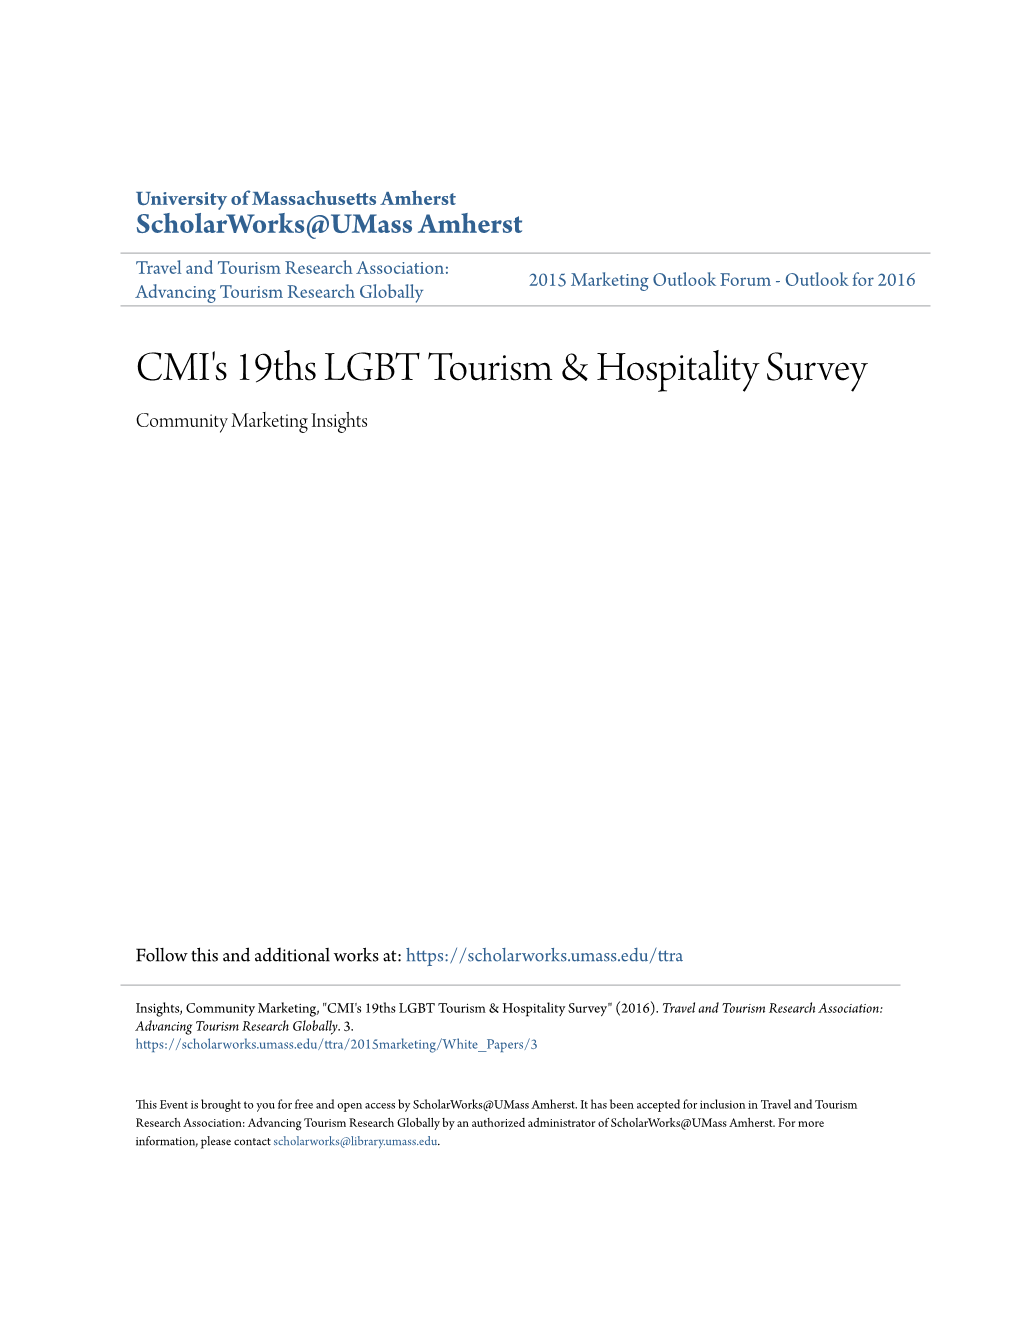 CMI's 19Ths LGBT Tourism & Hospitality Survey